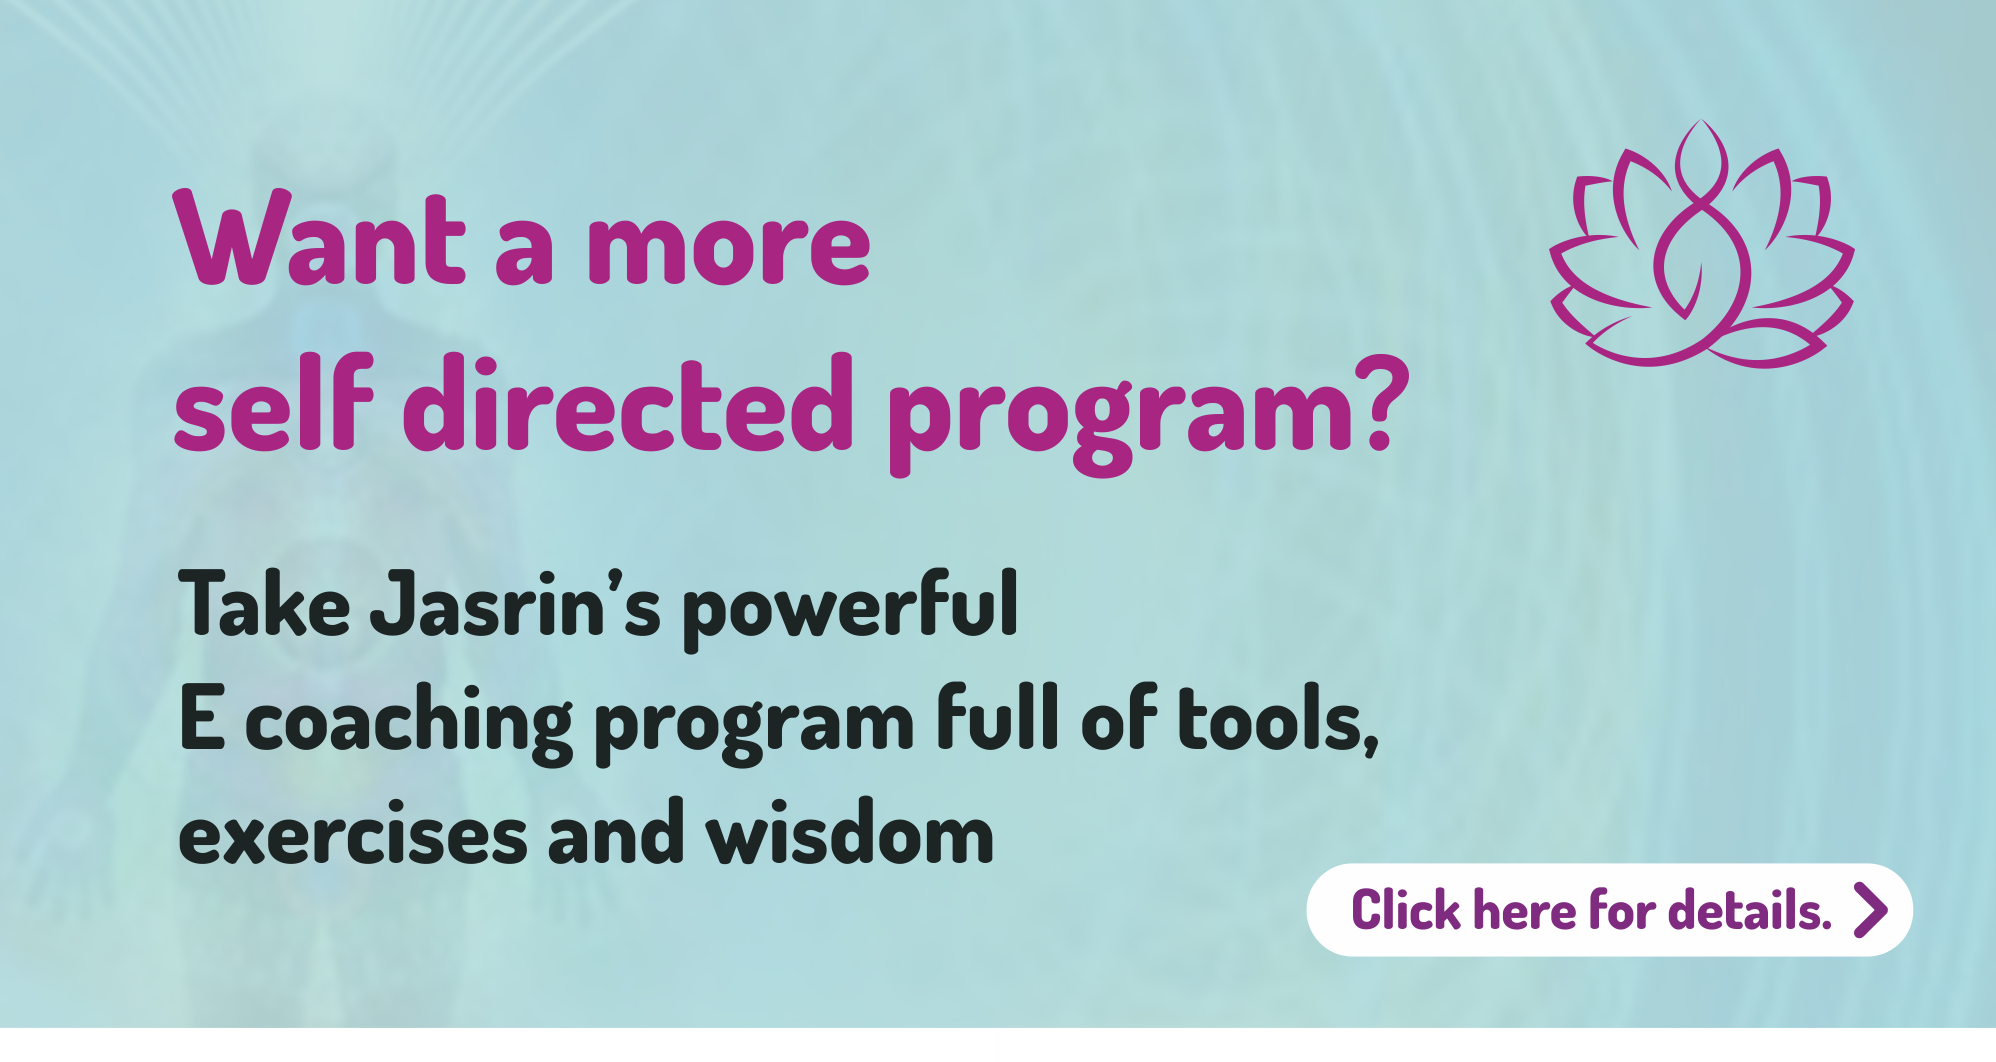 Take Jasrin’s powerful E coaching program full of tools, exercises and wisdom